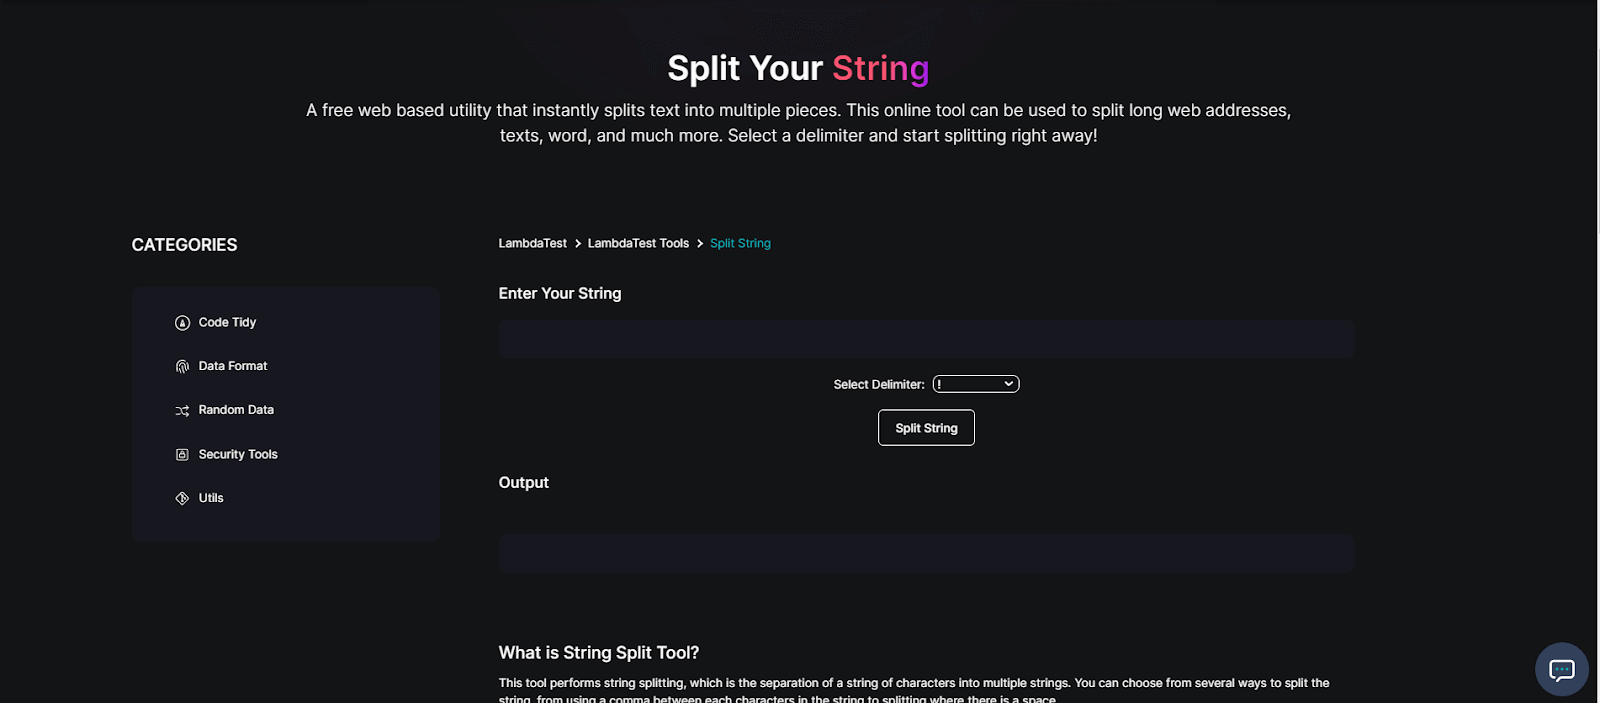 Split Your String